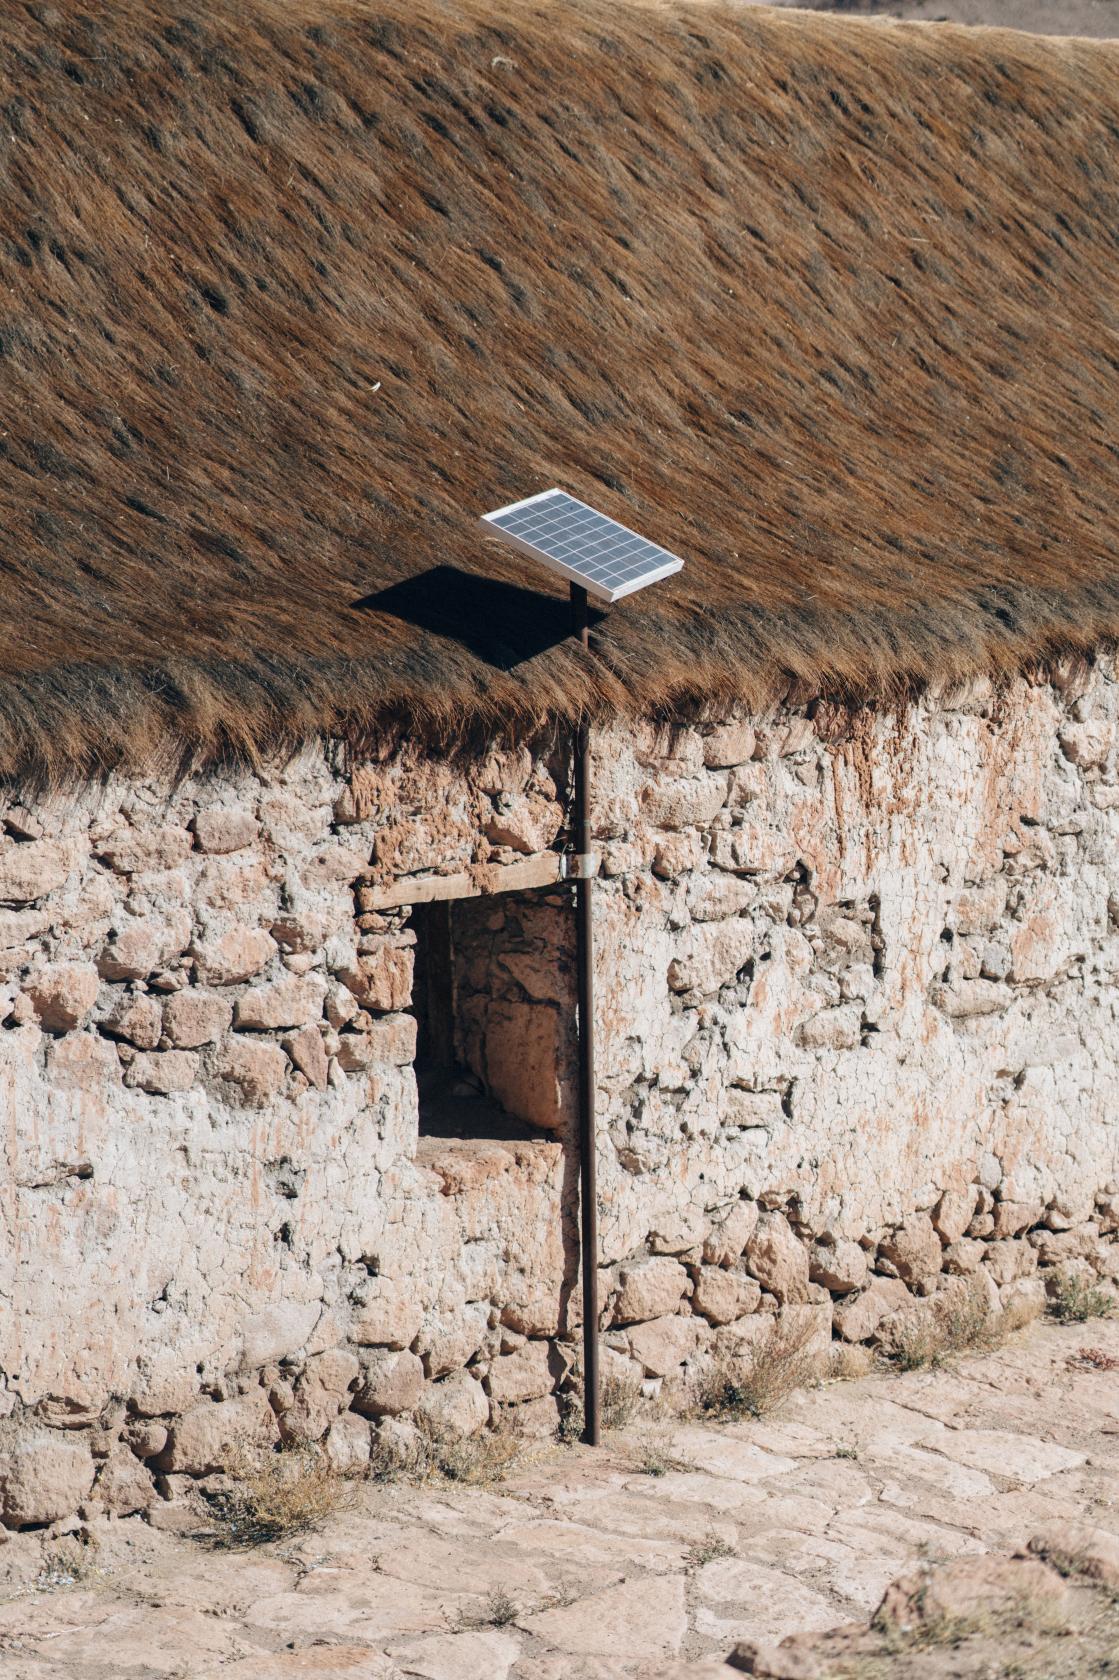 Mujeres peruanas instalan paneles solares e iluminan sus comunidades